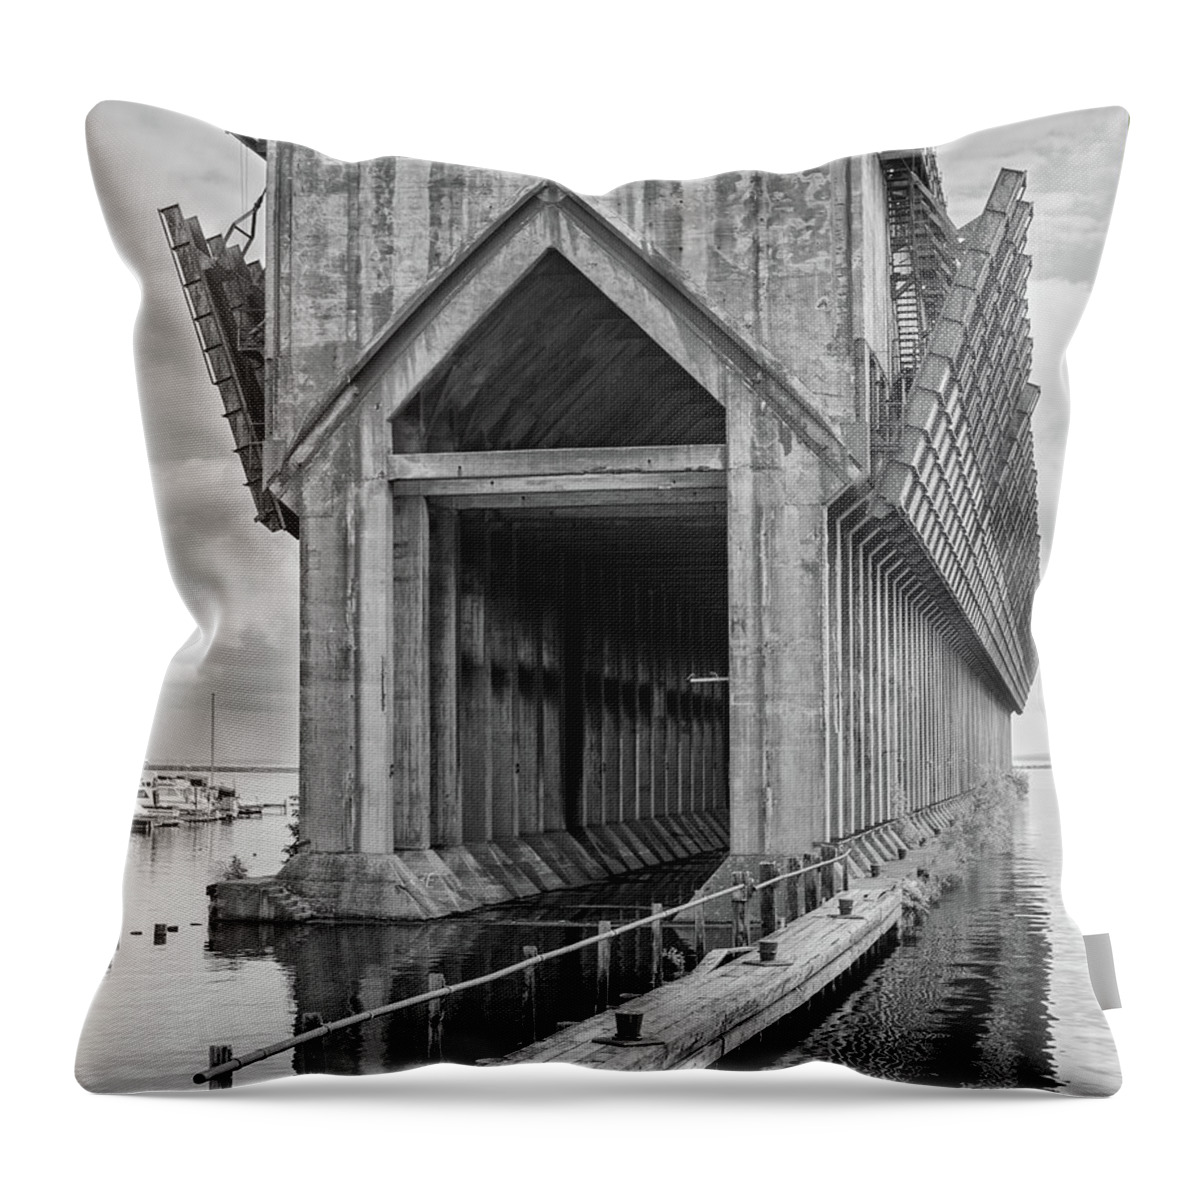 Ore Dock Throw Pillow featuring the photograph Lower Harbor Ore Dock by Jurgen Lorenzen